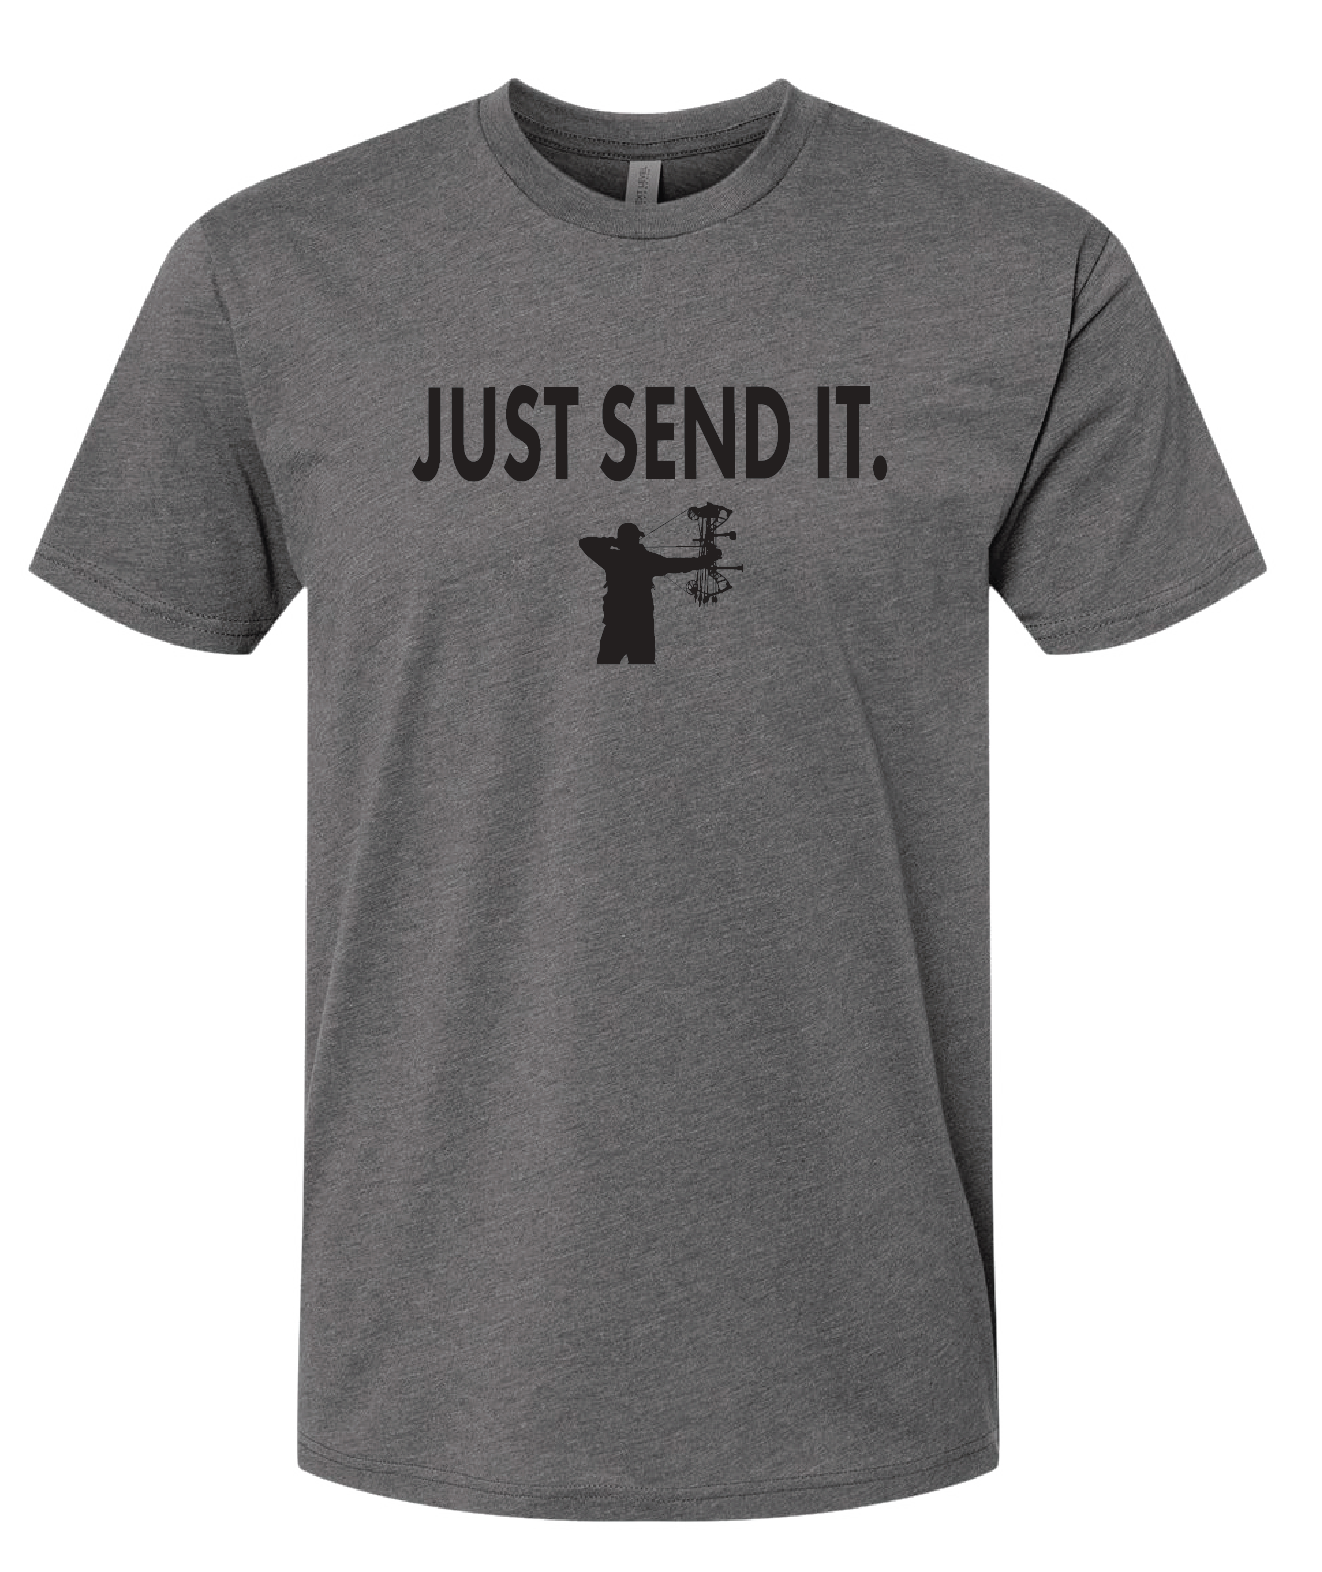 Just Send It Tee [Gray]